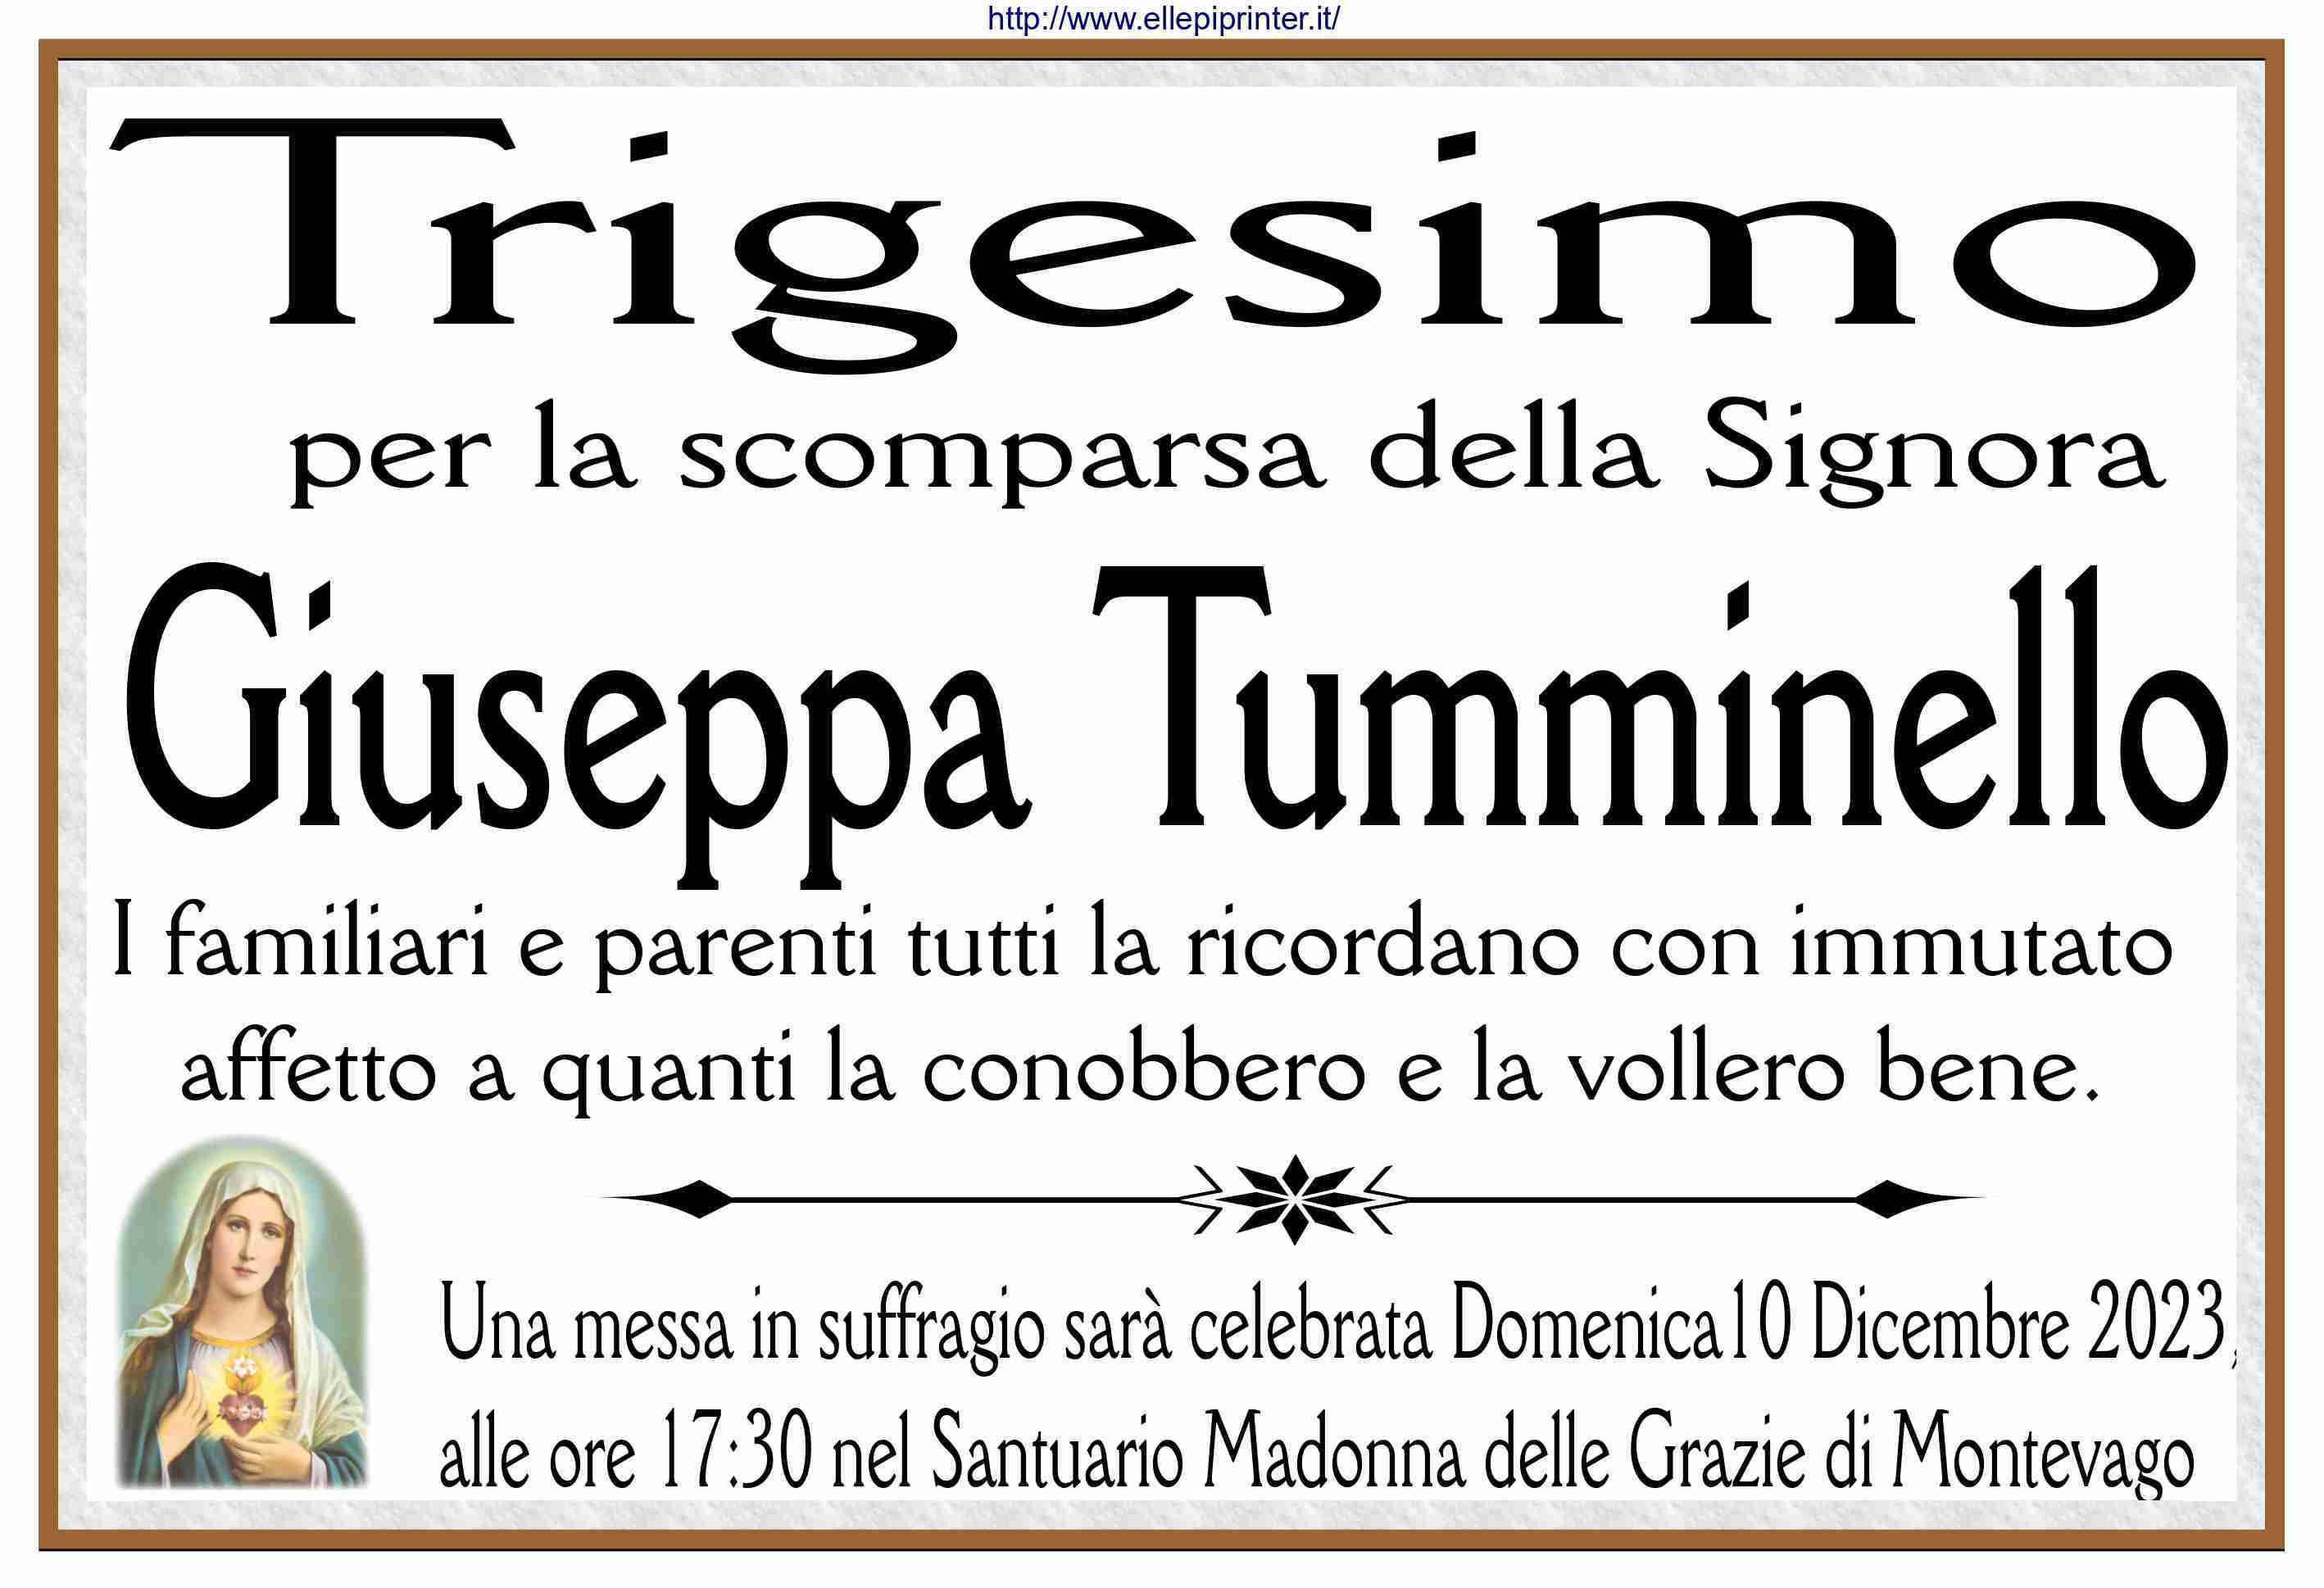 Giuseppa Tumminello